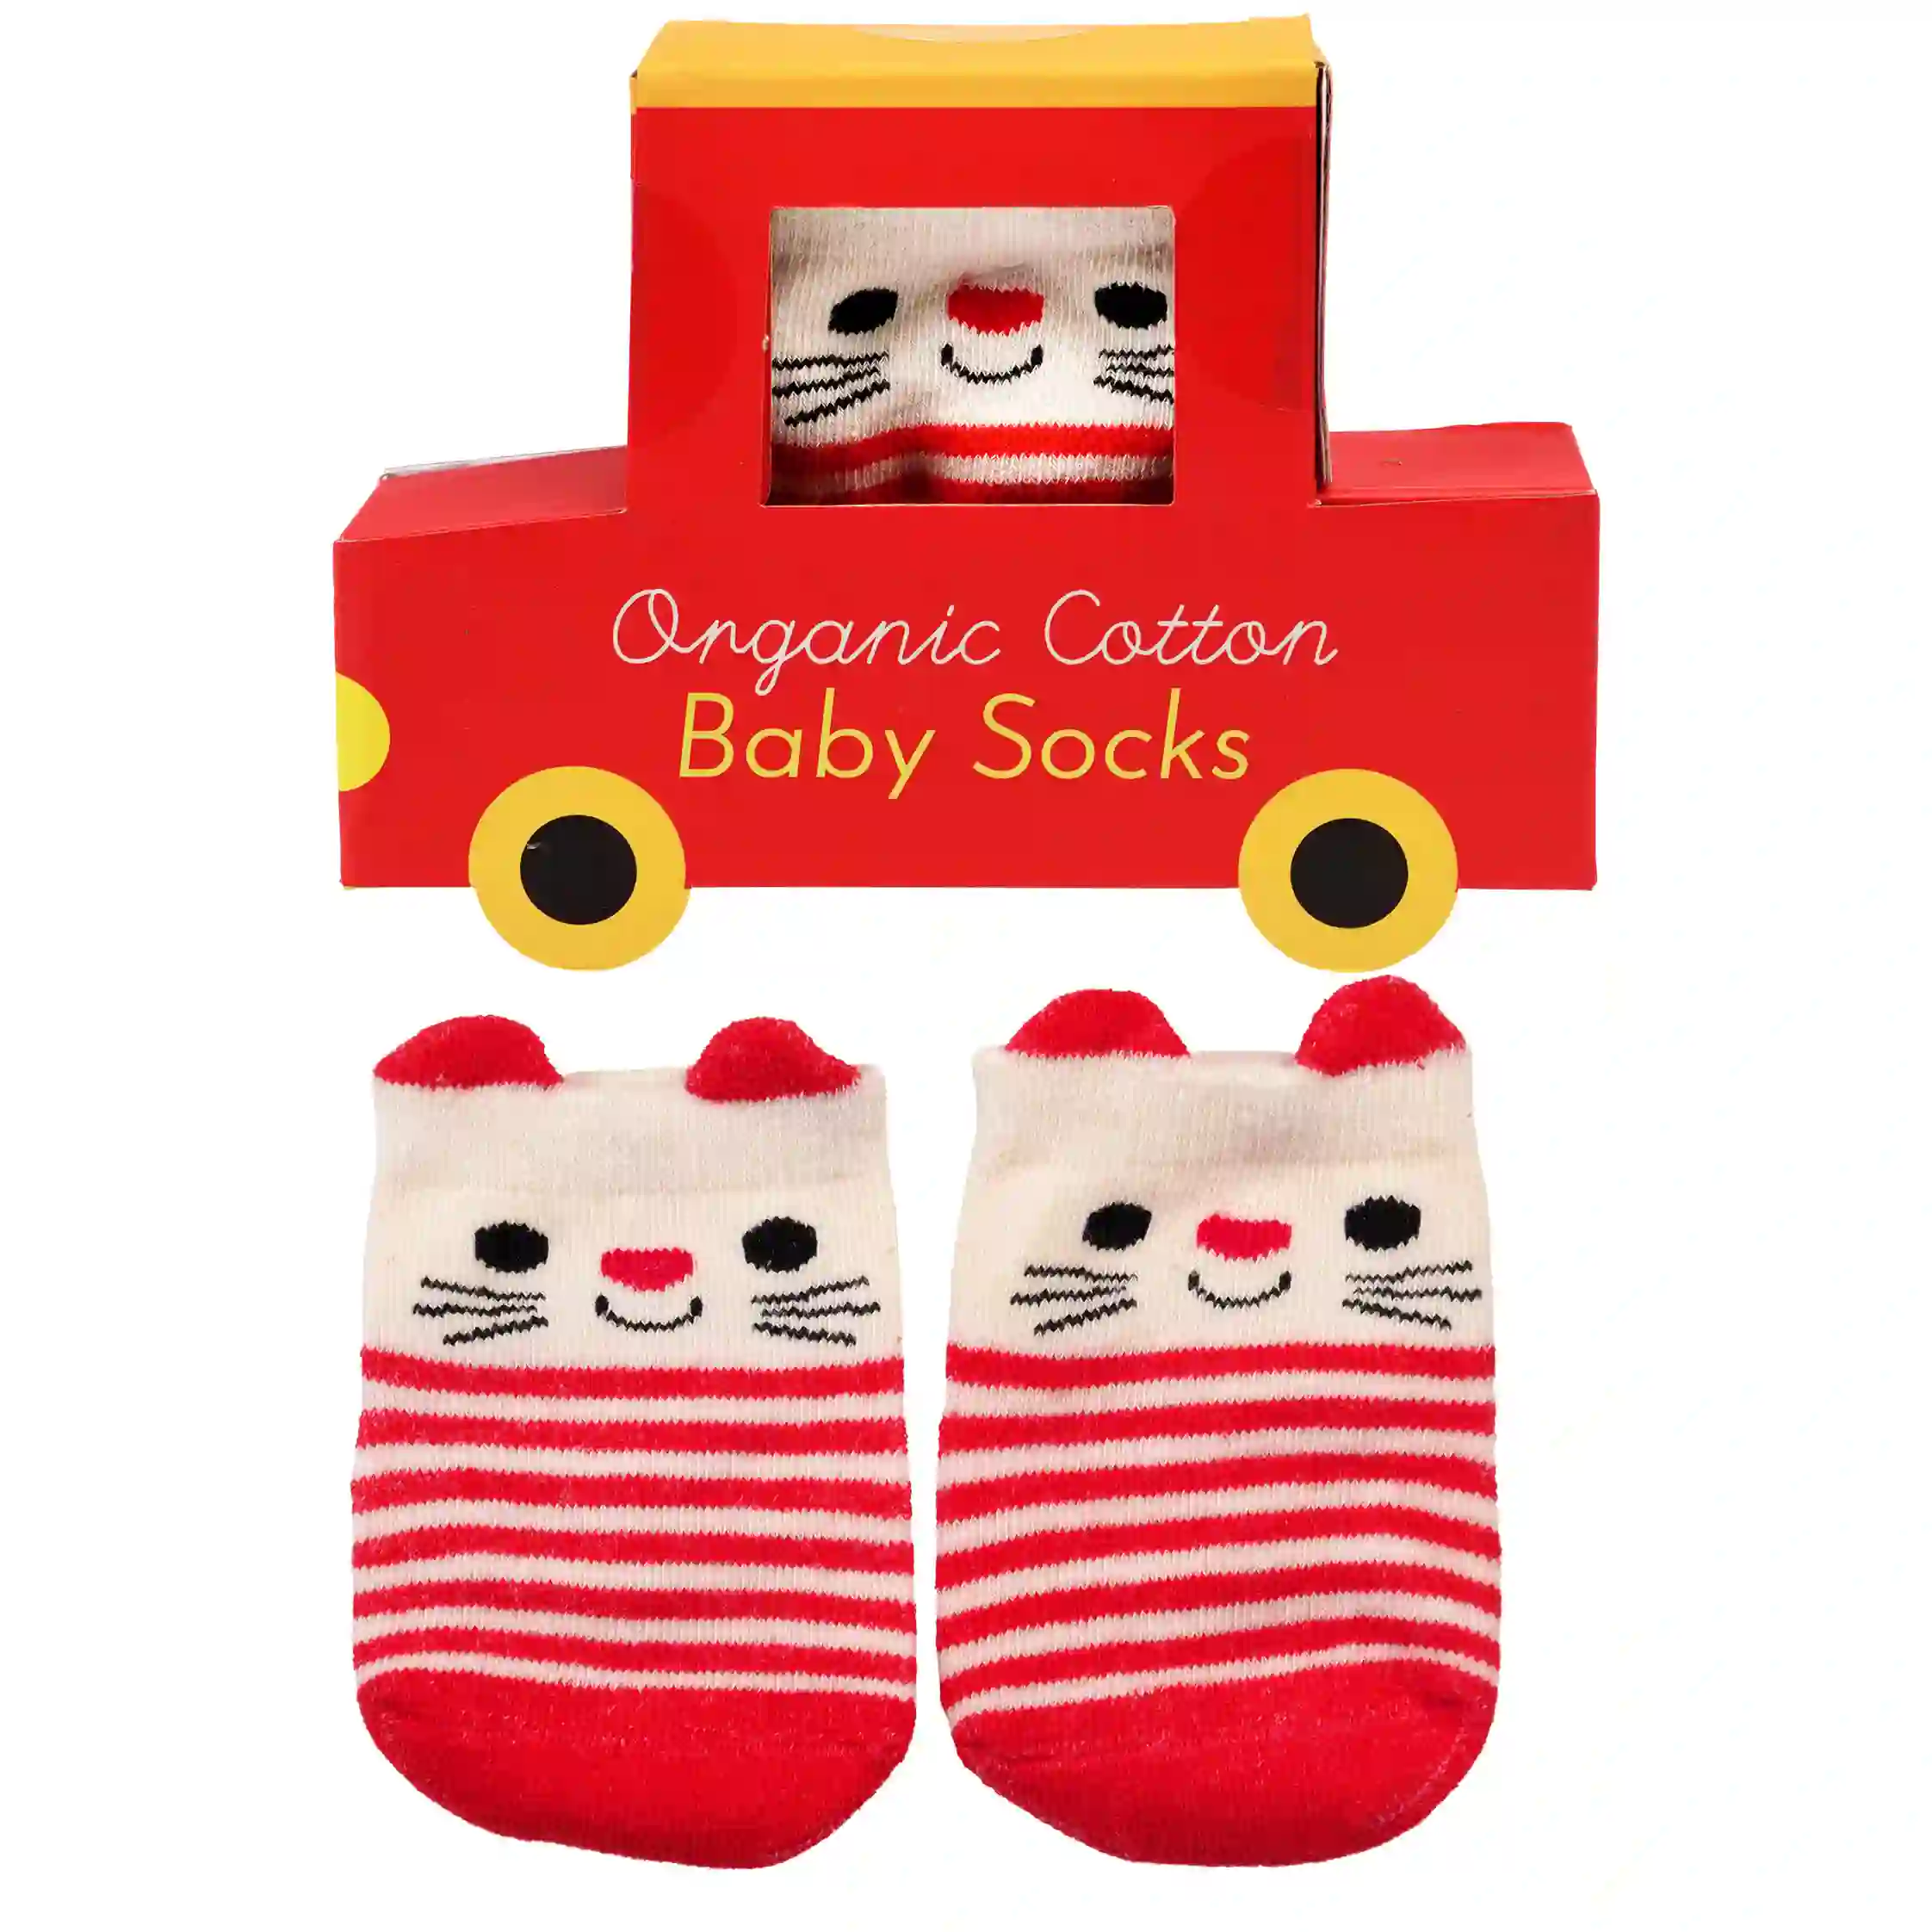 pair of baby socks - red cat